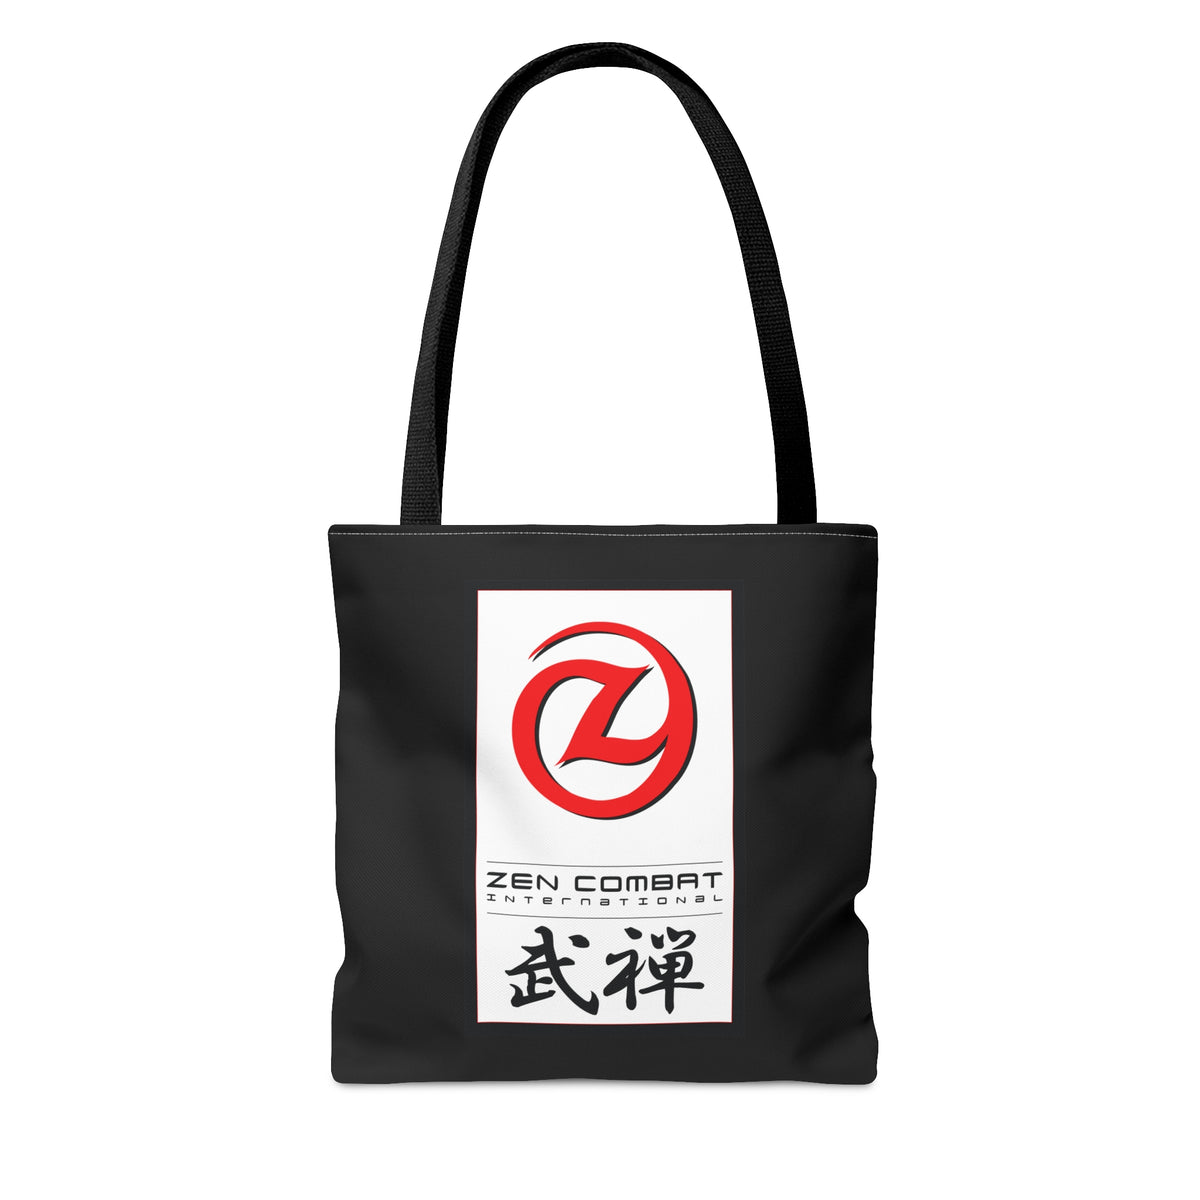 Zen Combat Tote Bag - Black